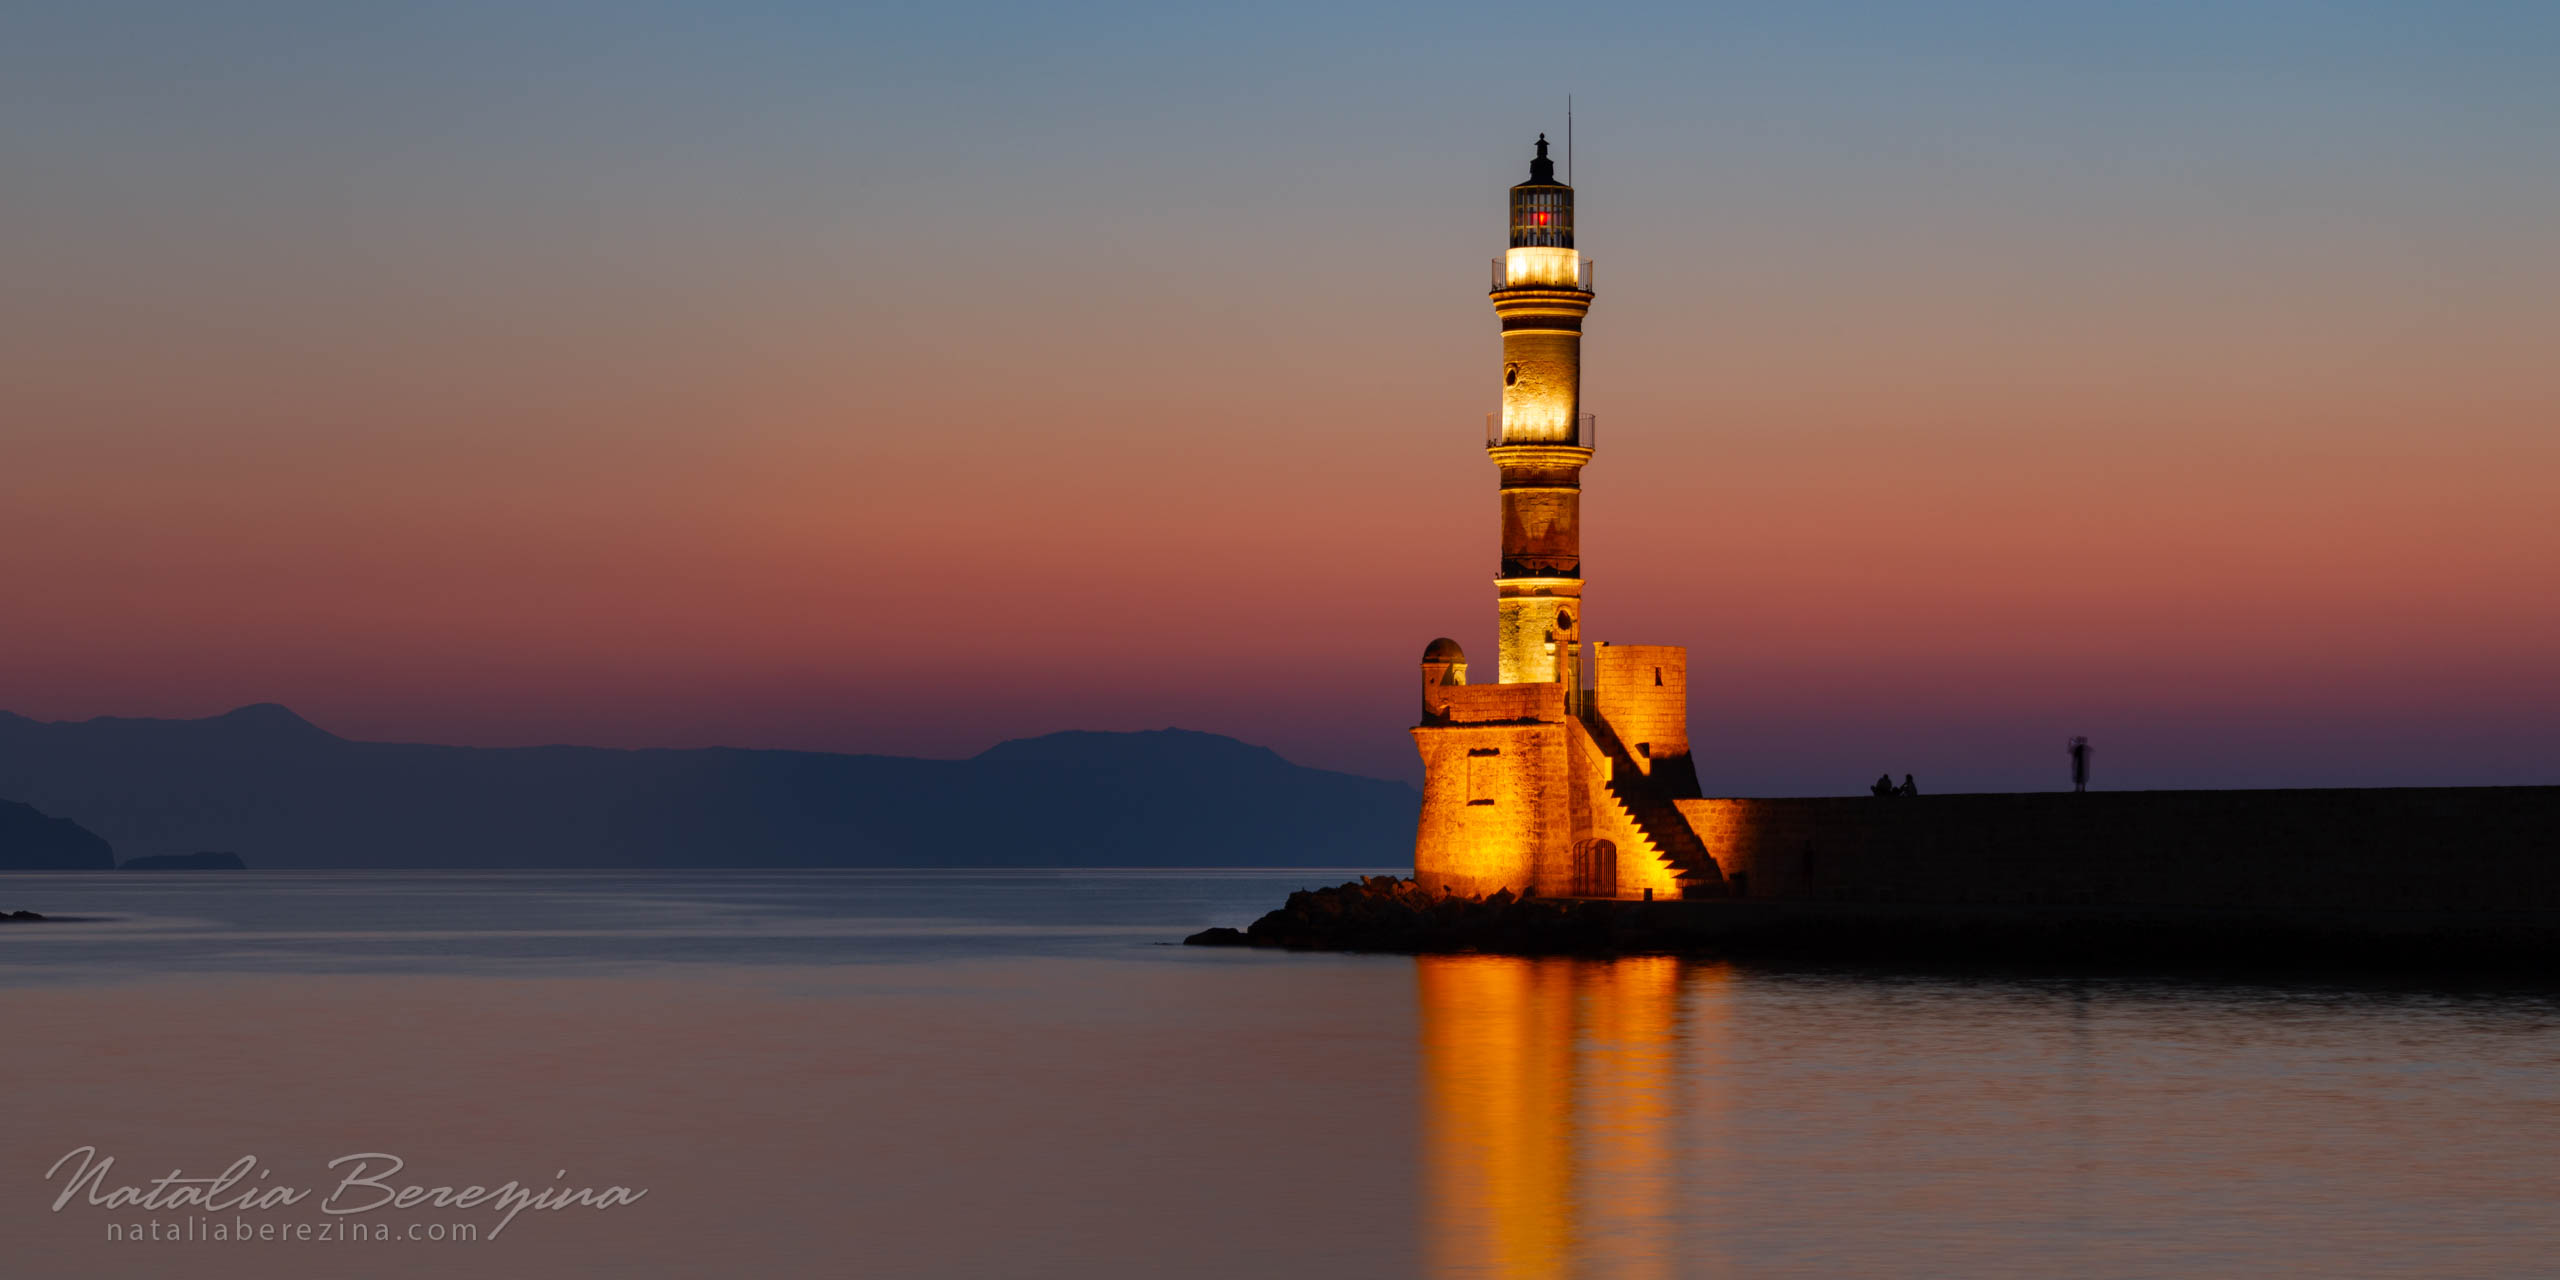 Greece, Crete, sunset, lighthouse, orange, 2x1 CR1-NBAG0Z5645-P - Crete, Greece - Natalia Berezina Photography